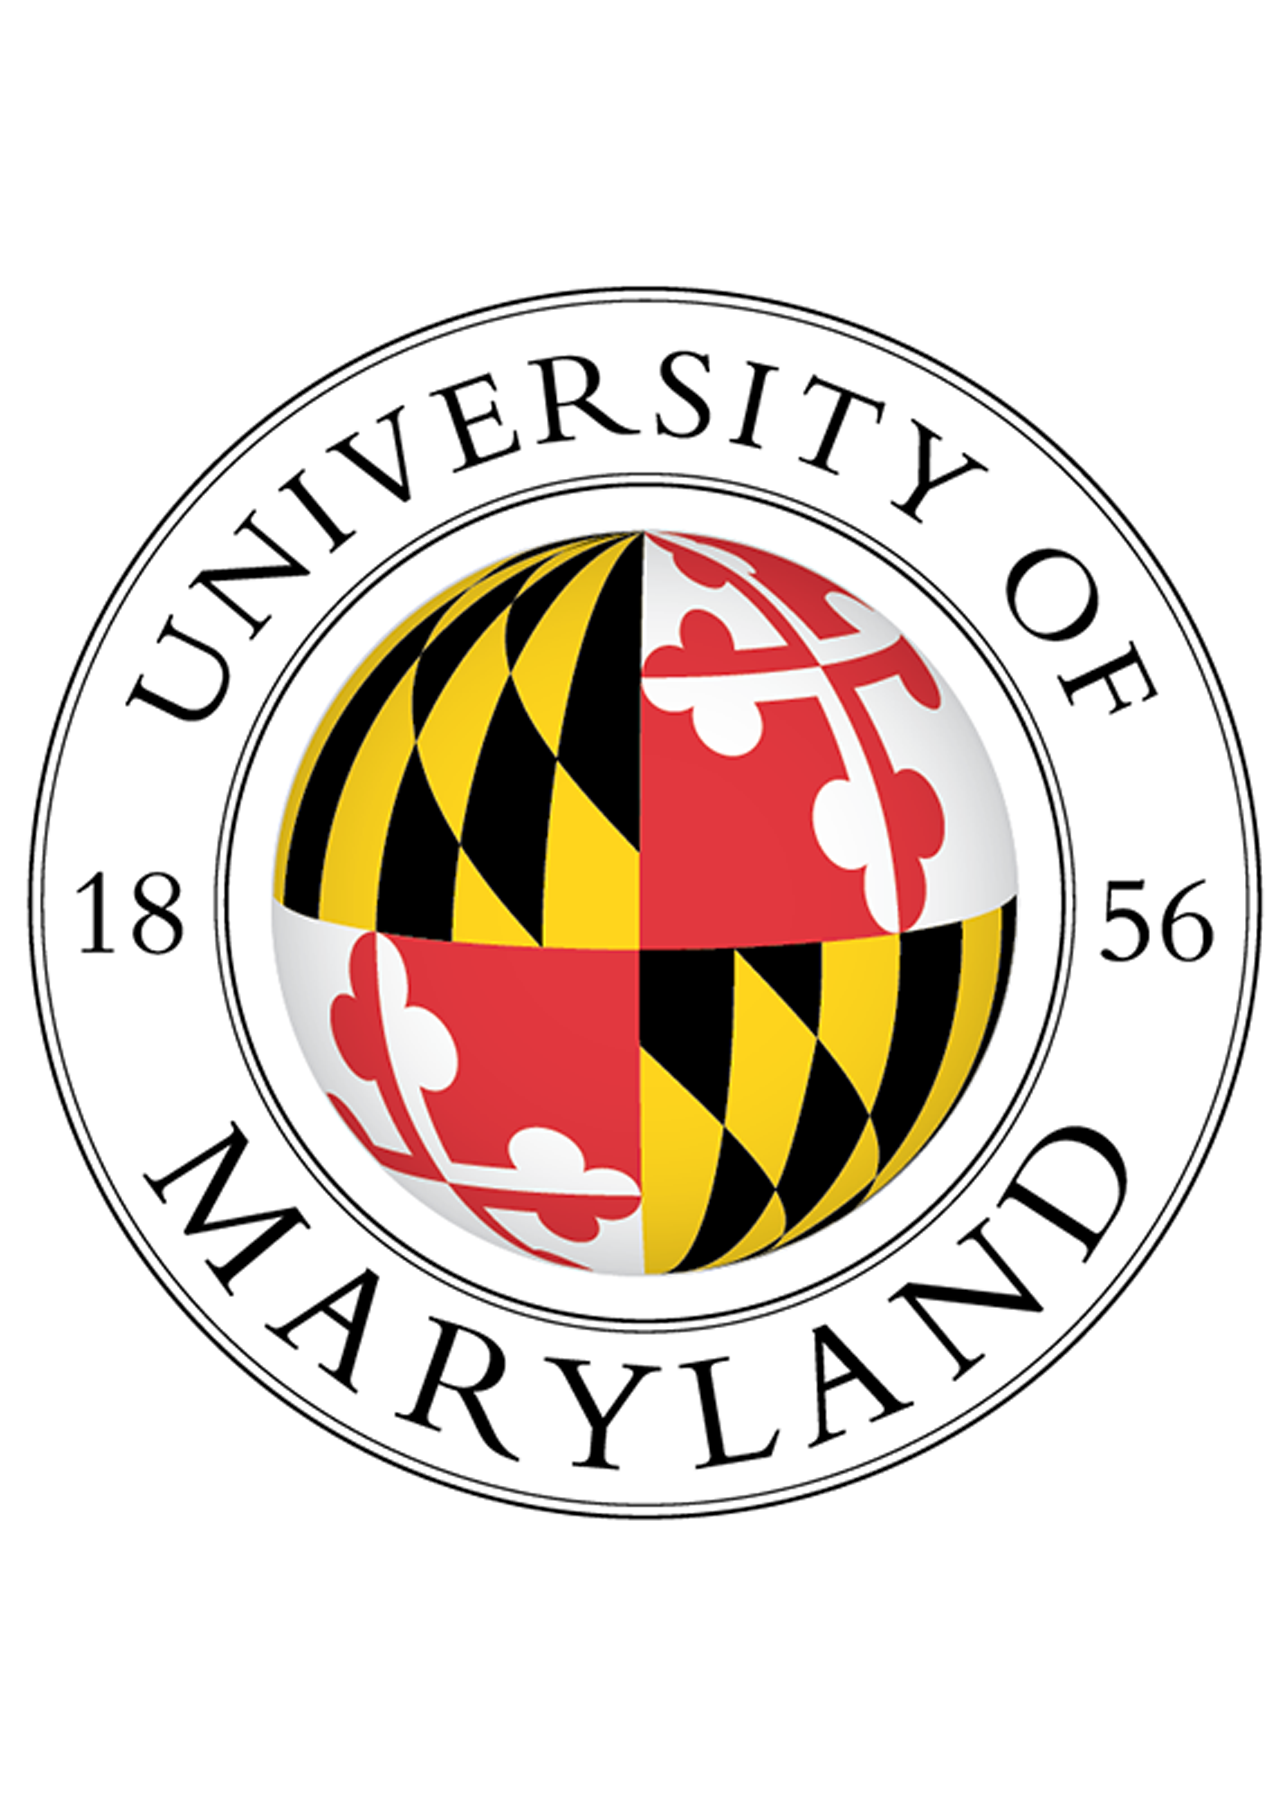 University of Maryland Global Campus